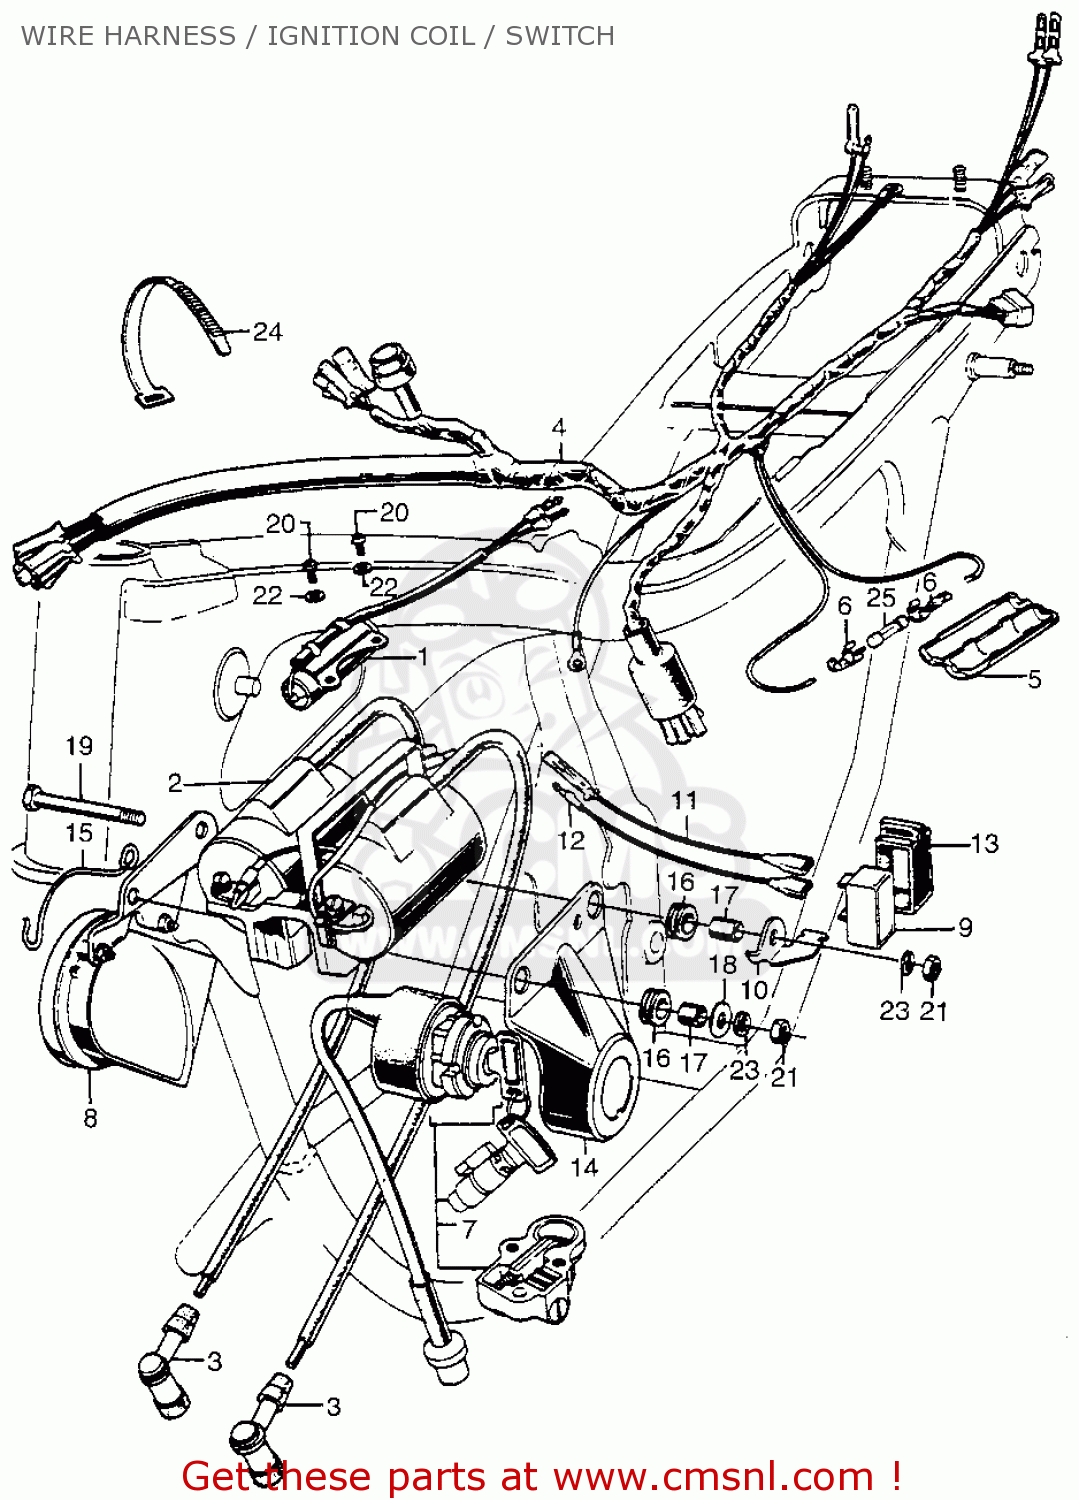 Honda Cl350 Scrambler 1973 K5 Usa Wire Harness / Ignition ... honda 305 wiring diagram 